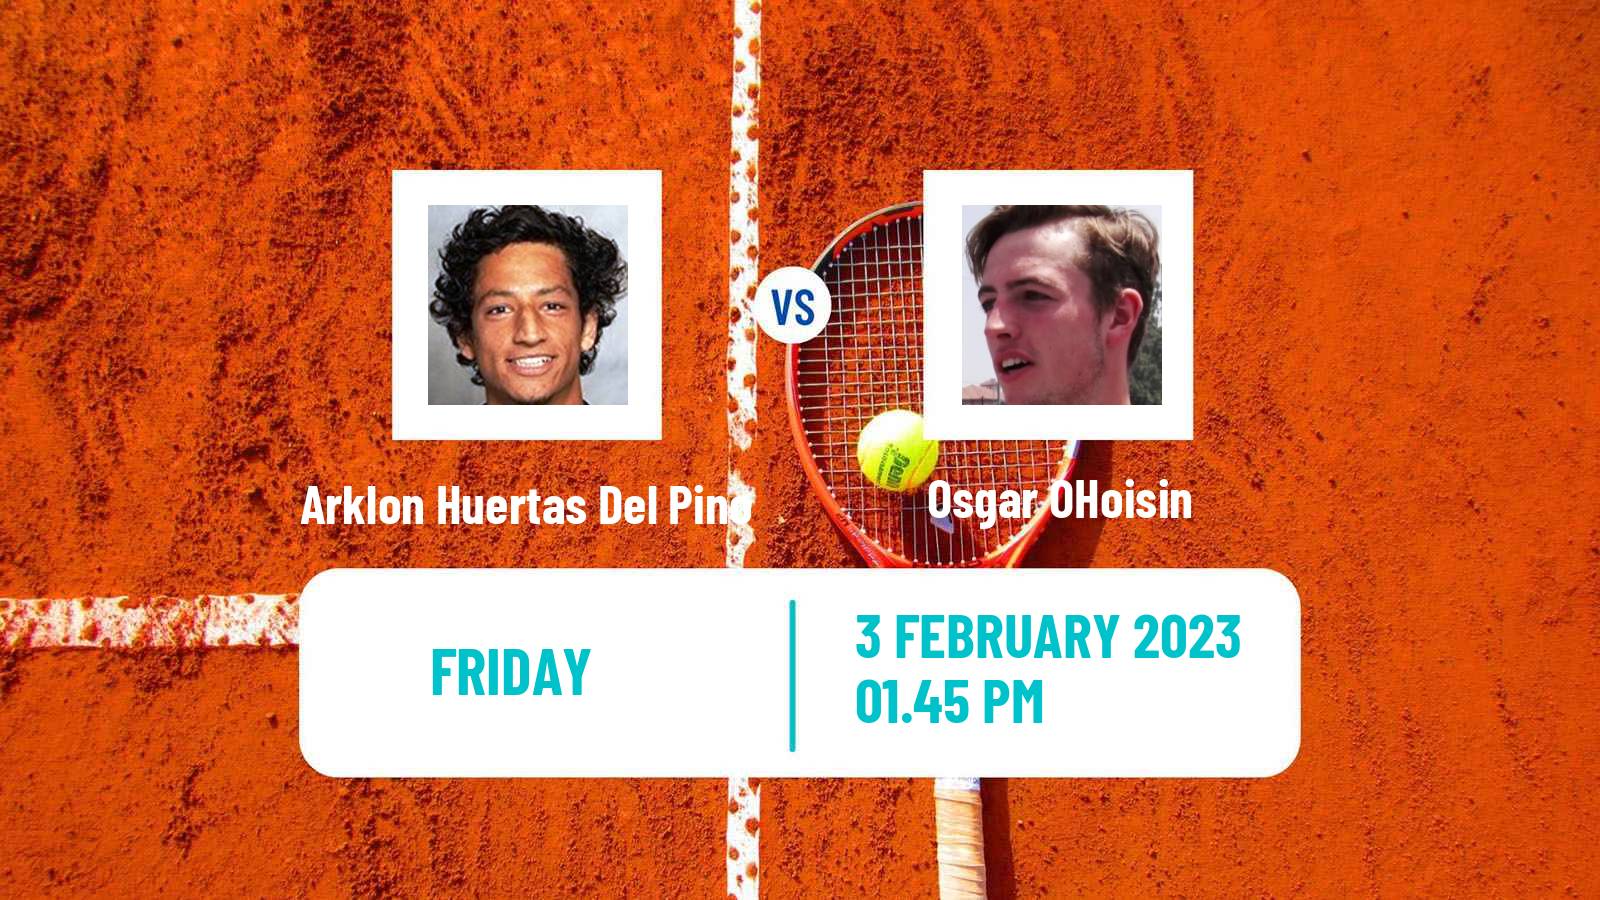 Tennis Davis Cup World Group I Arklon Huertas Del Pino - Osgar OHoisin